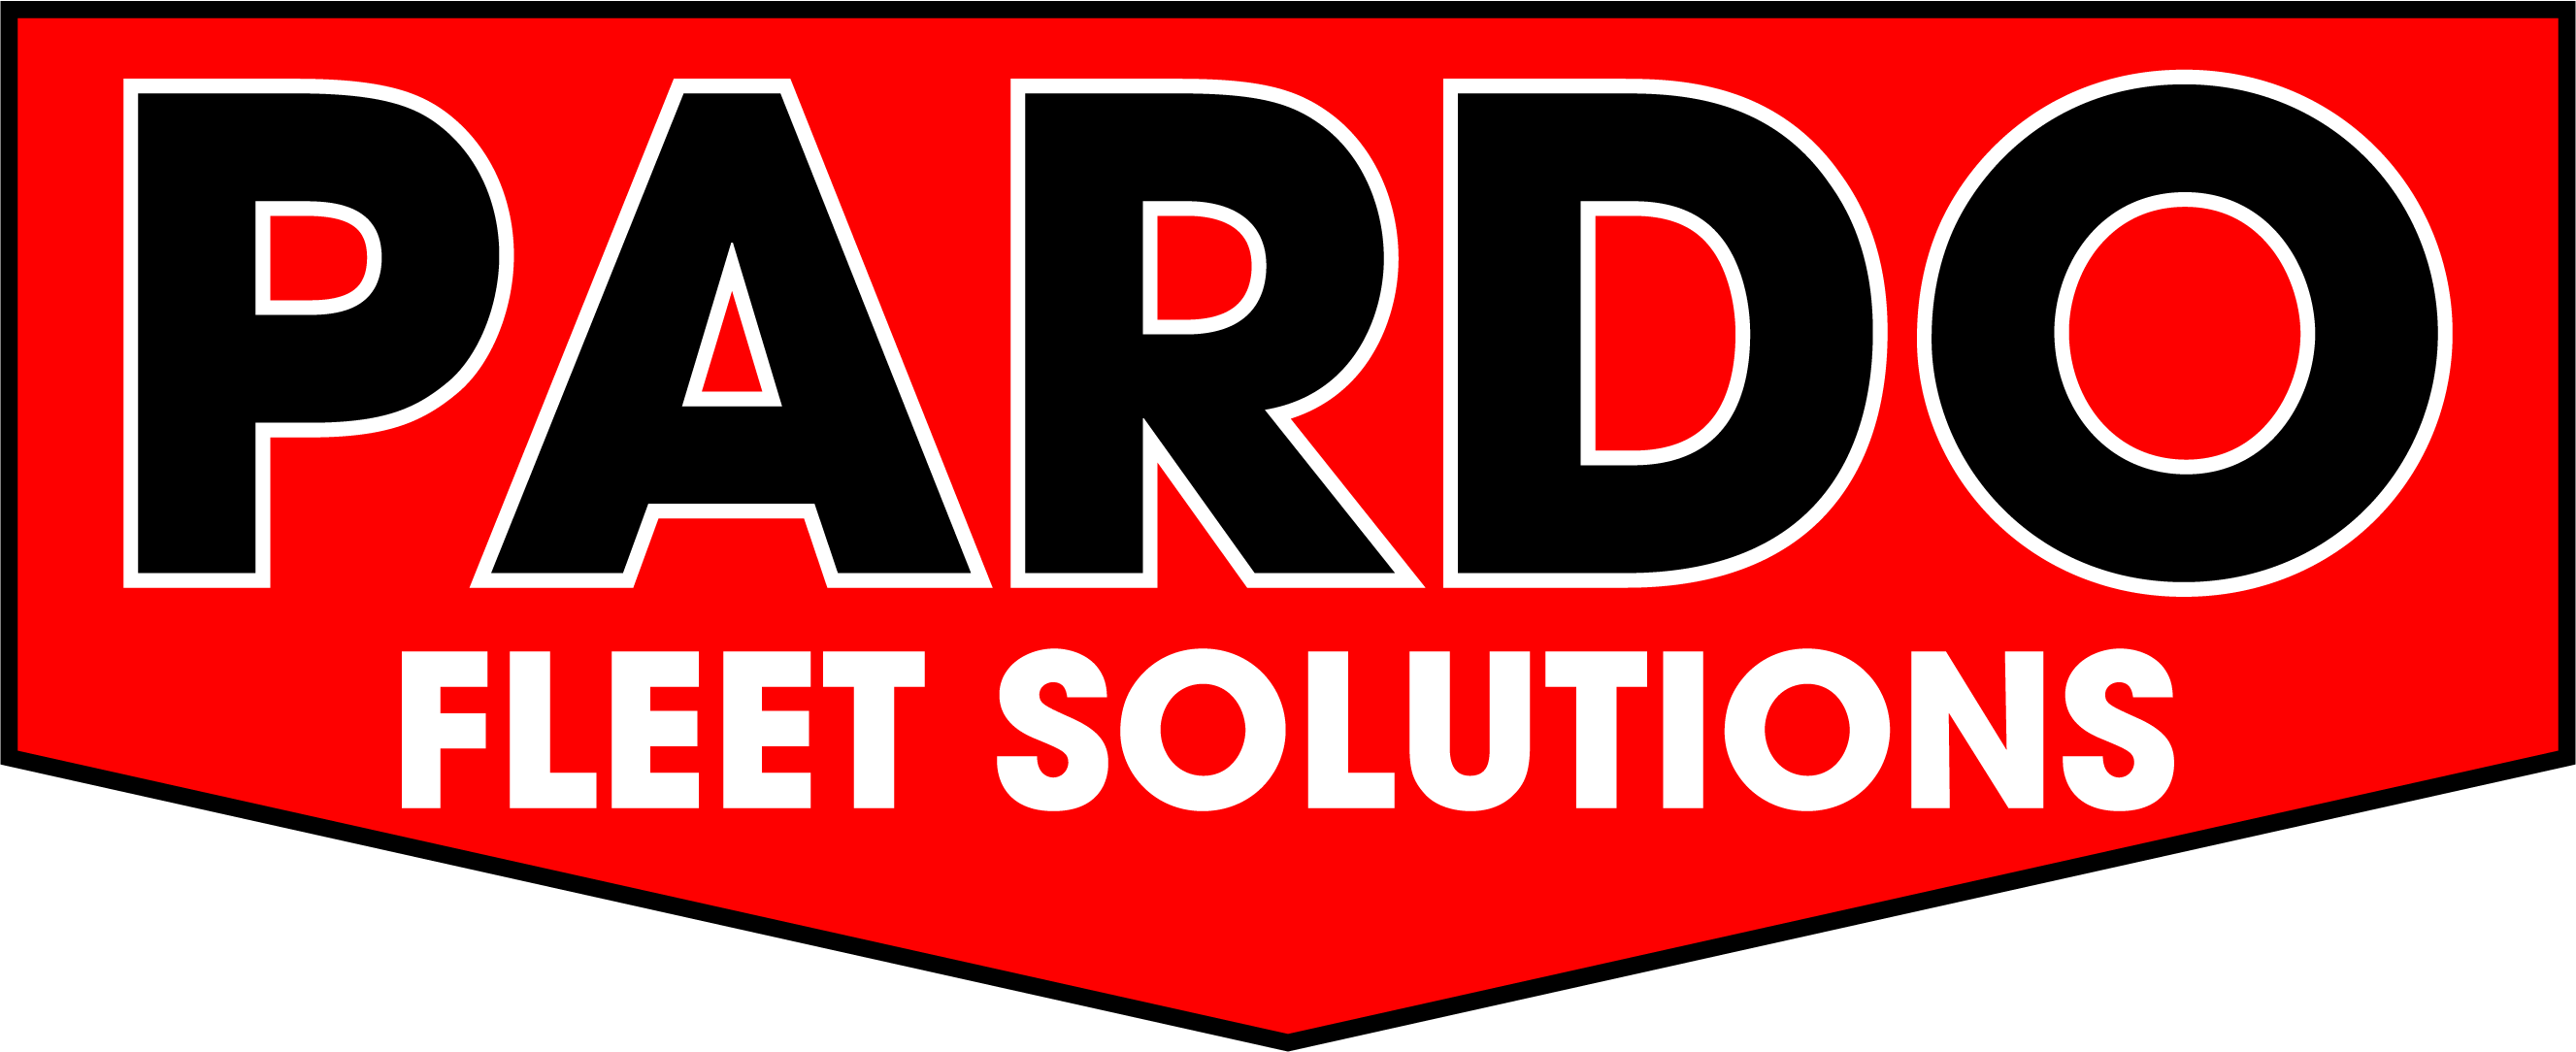 Pardo Fleet Solutions Logo